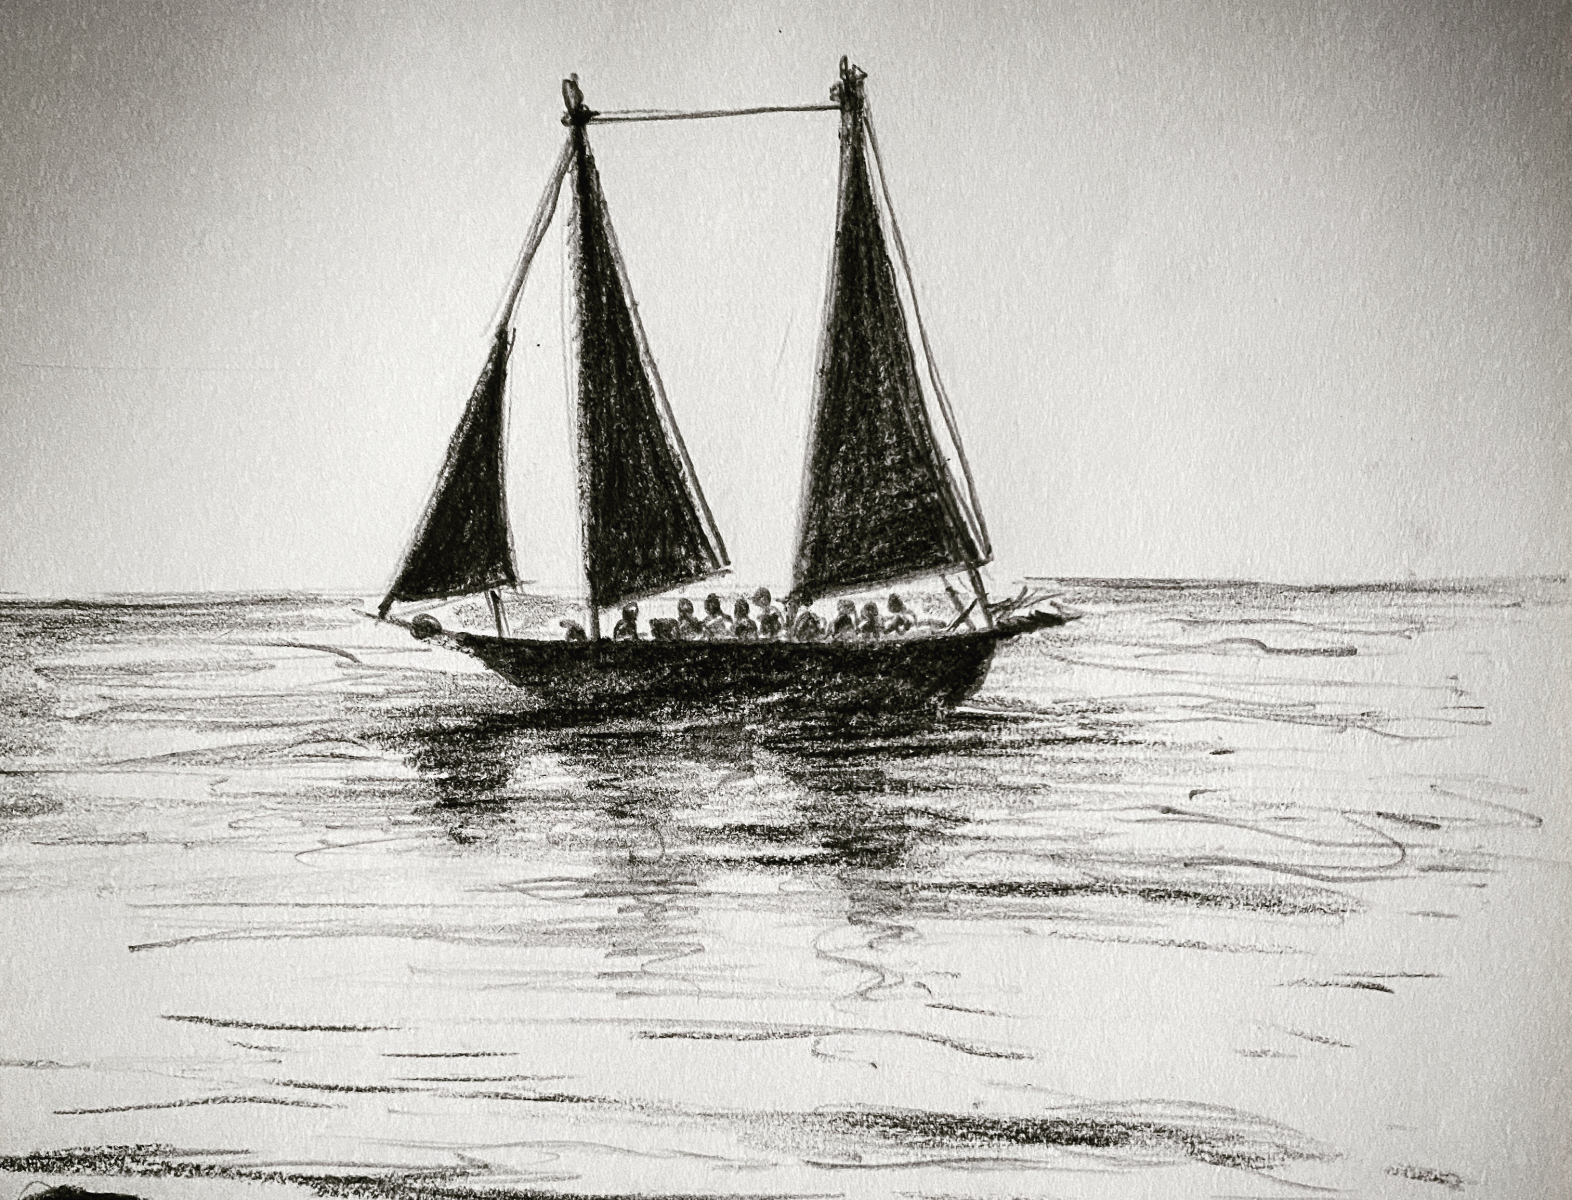 Pencil sketch drawing boat in open sea by Rakesh Mondal on Dribbble